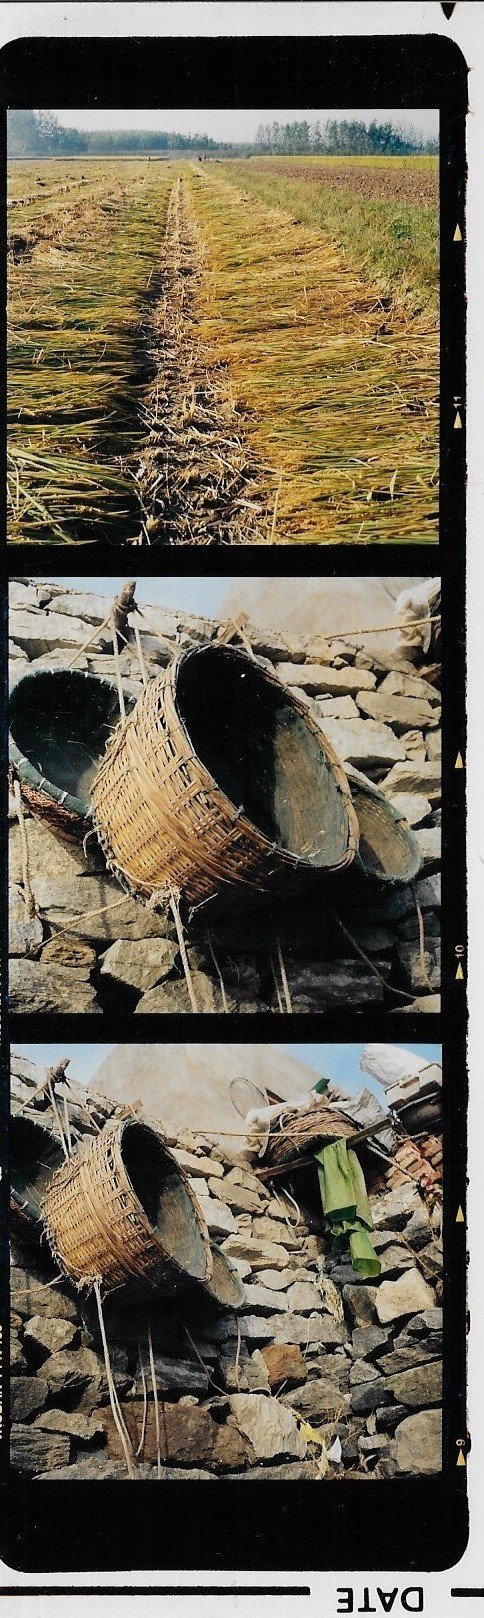 Rice Harvest Jiangsu 2001 .jpg